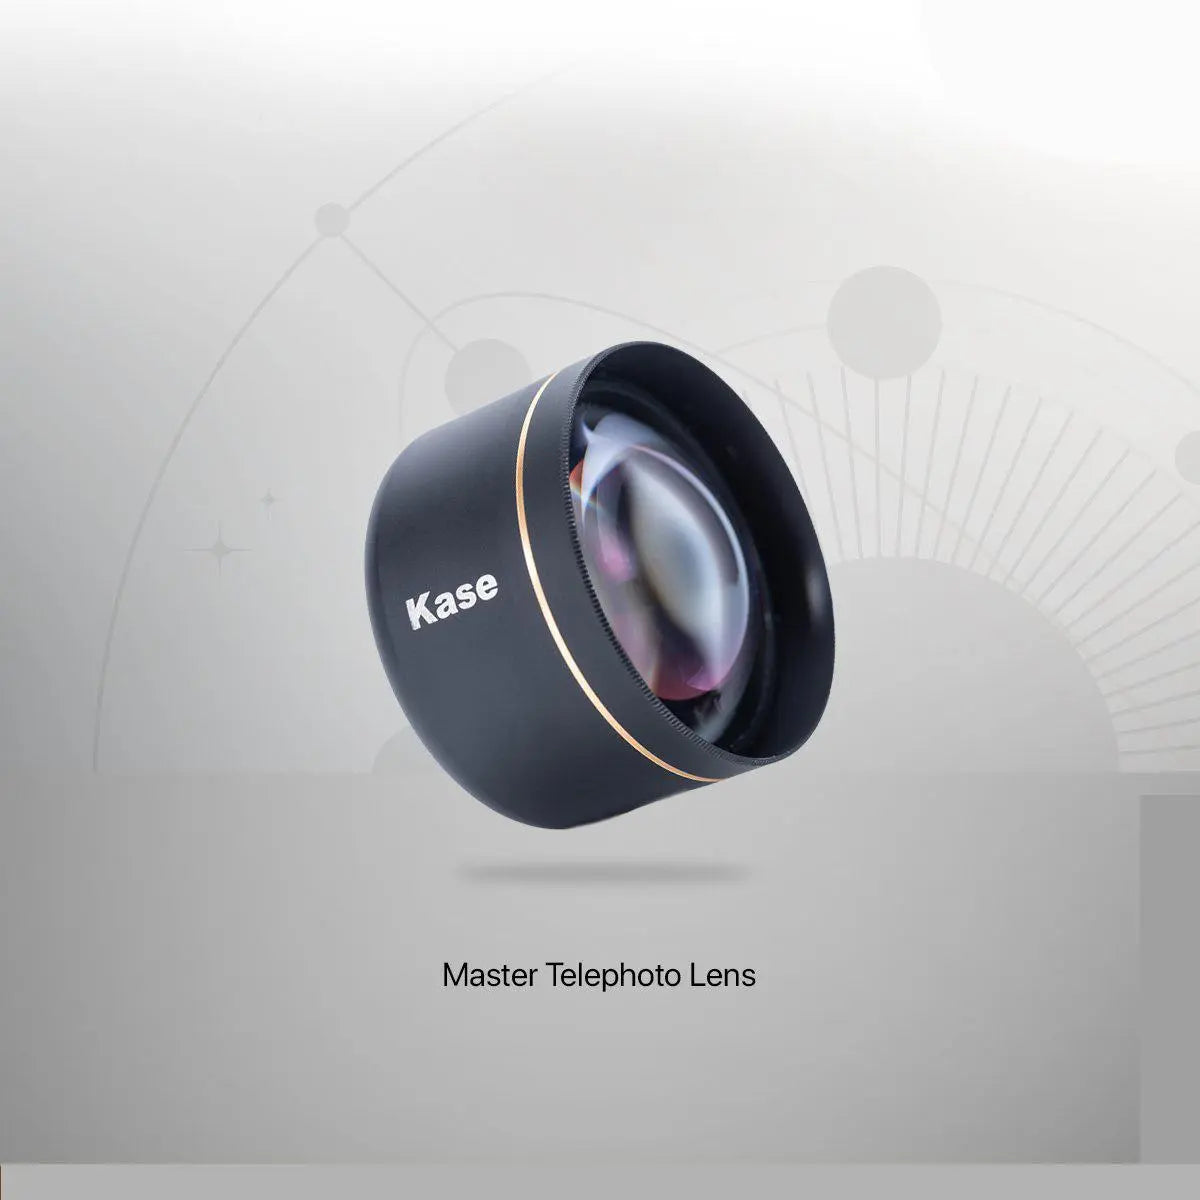 Kase Telephone Lens